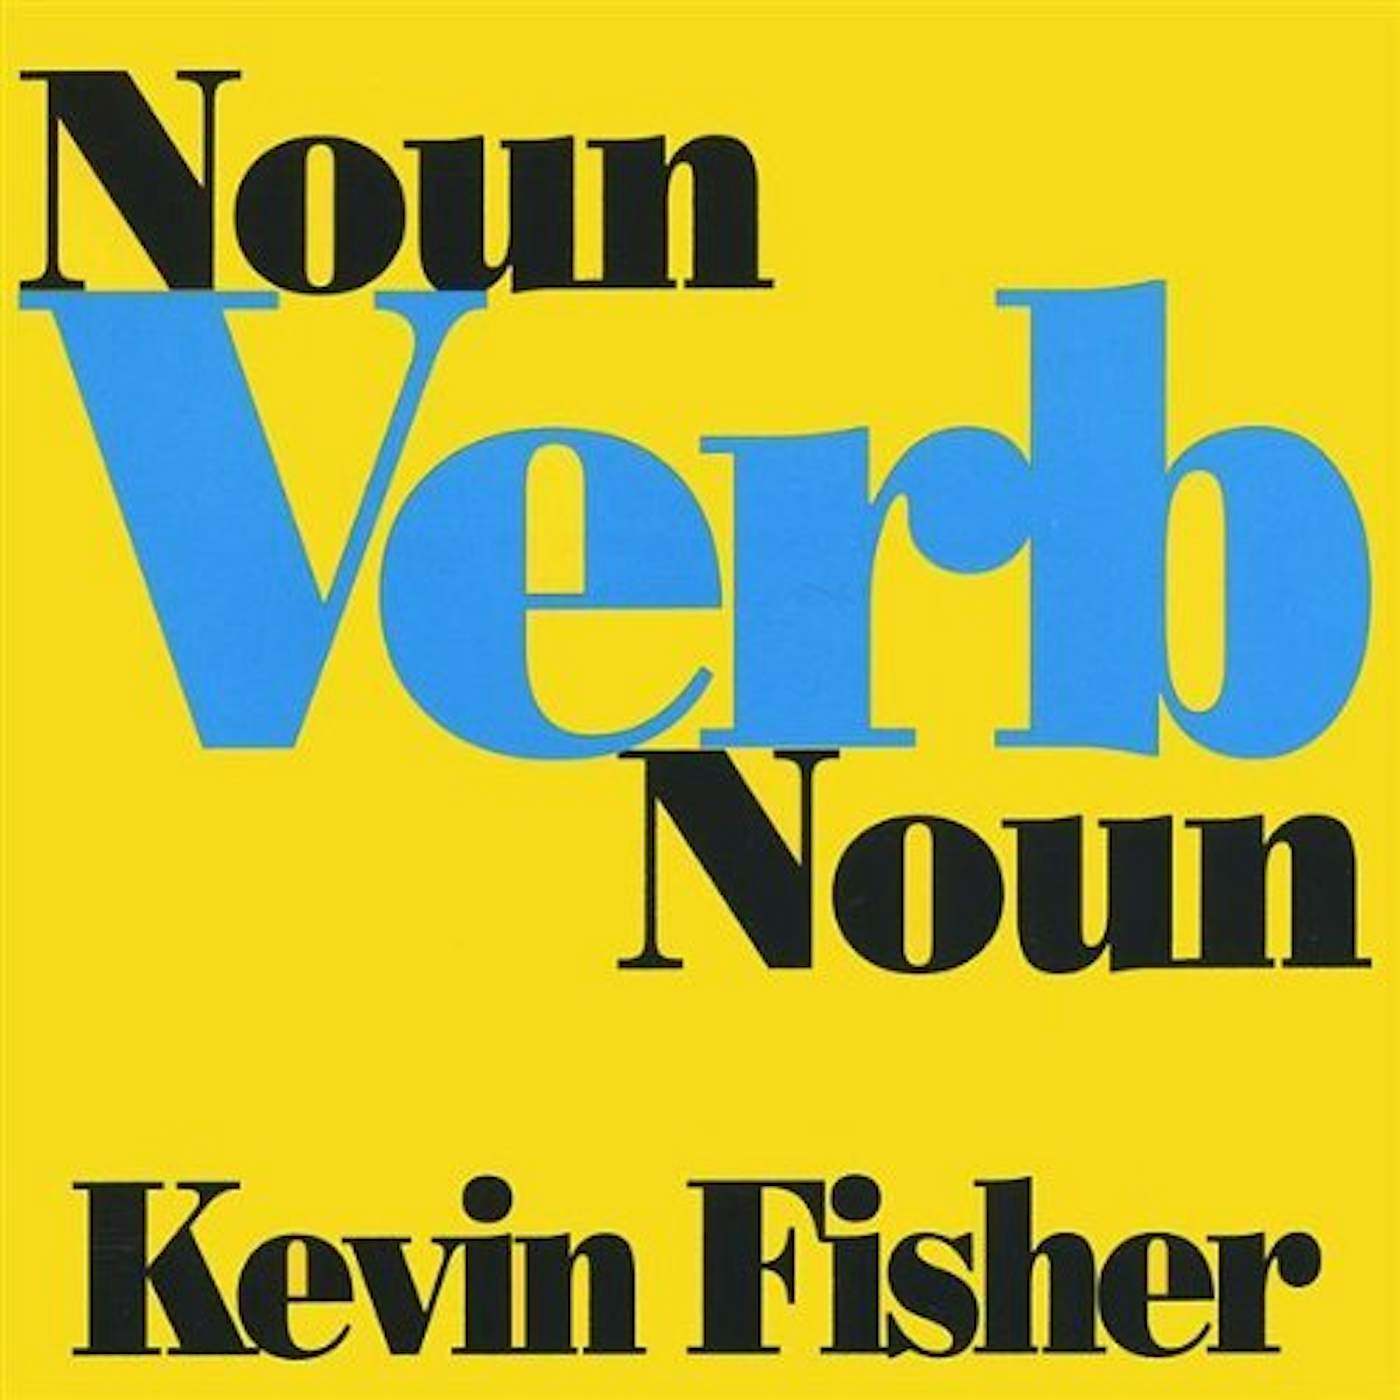 Kevin Fisher NOUN VERB NOUN CD